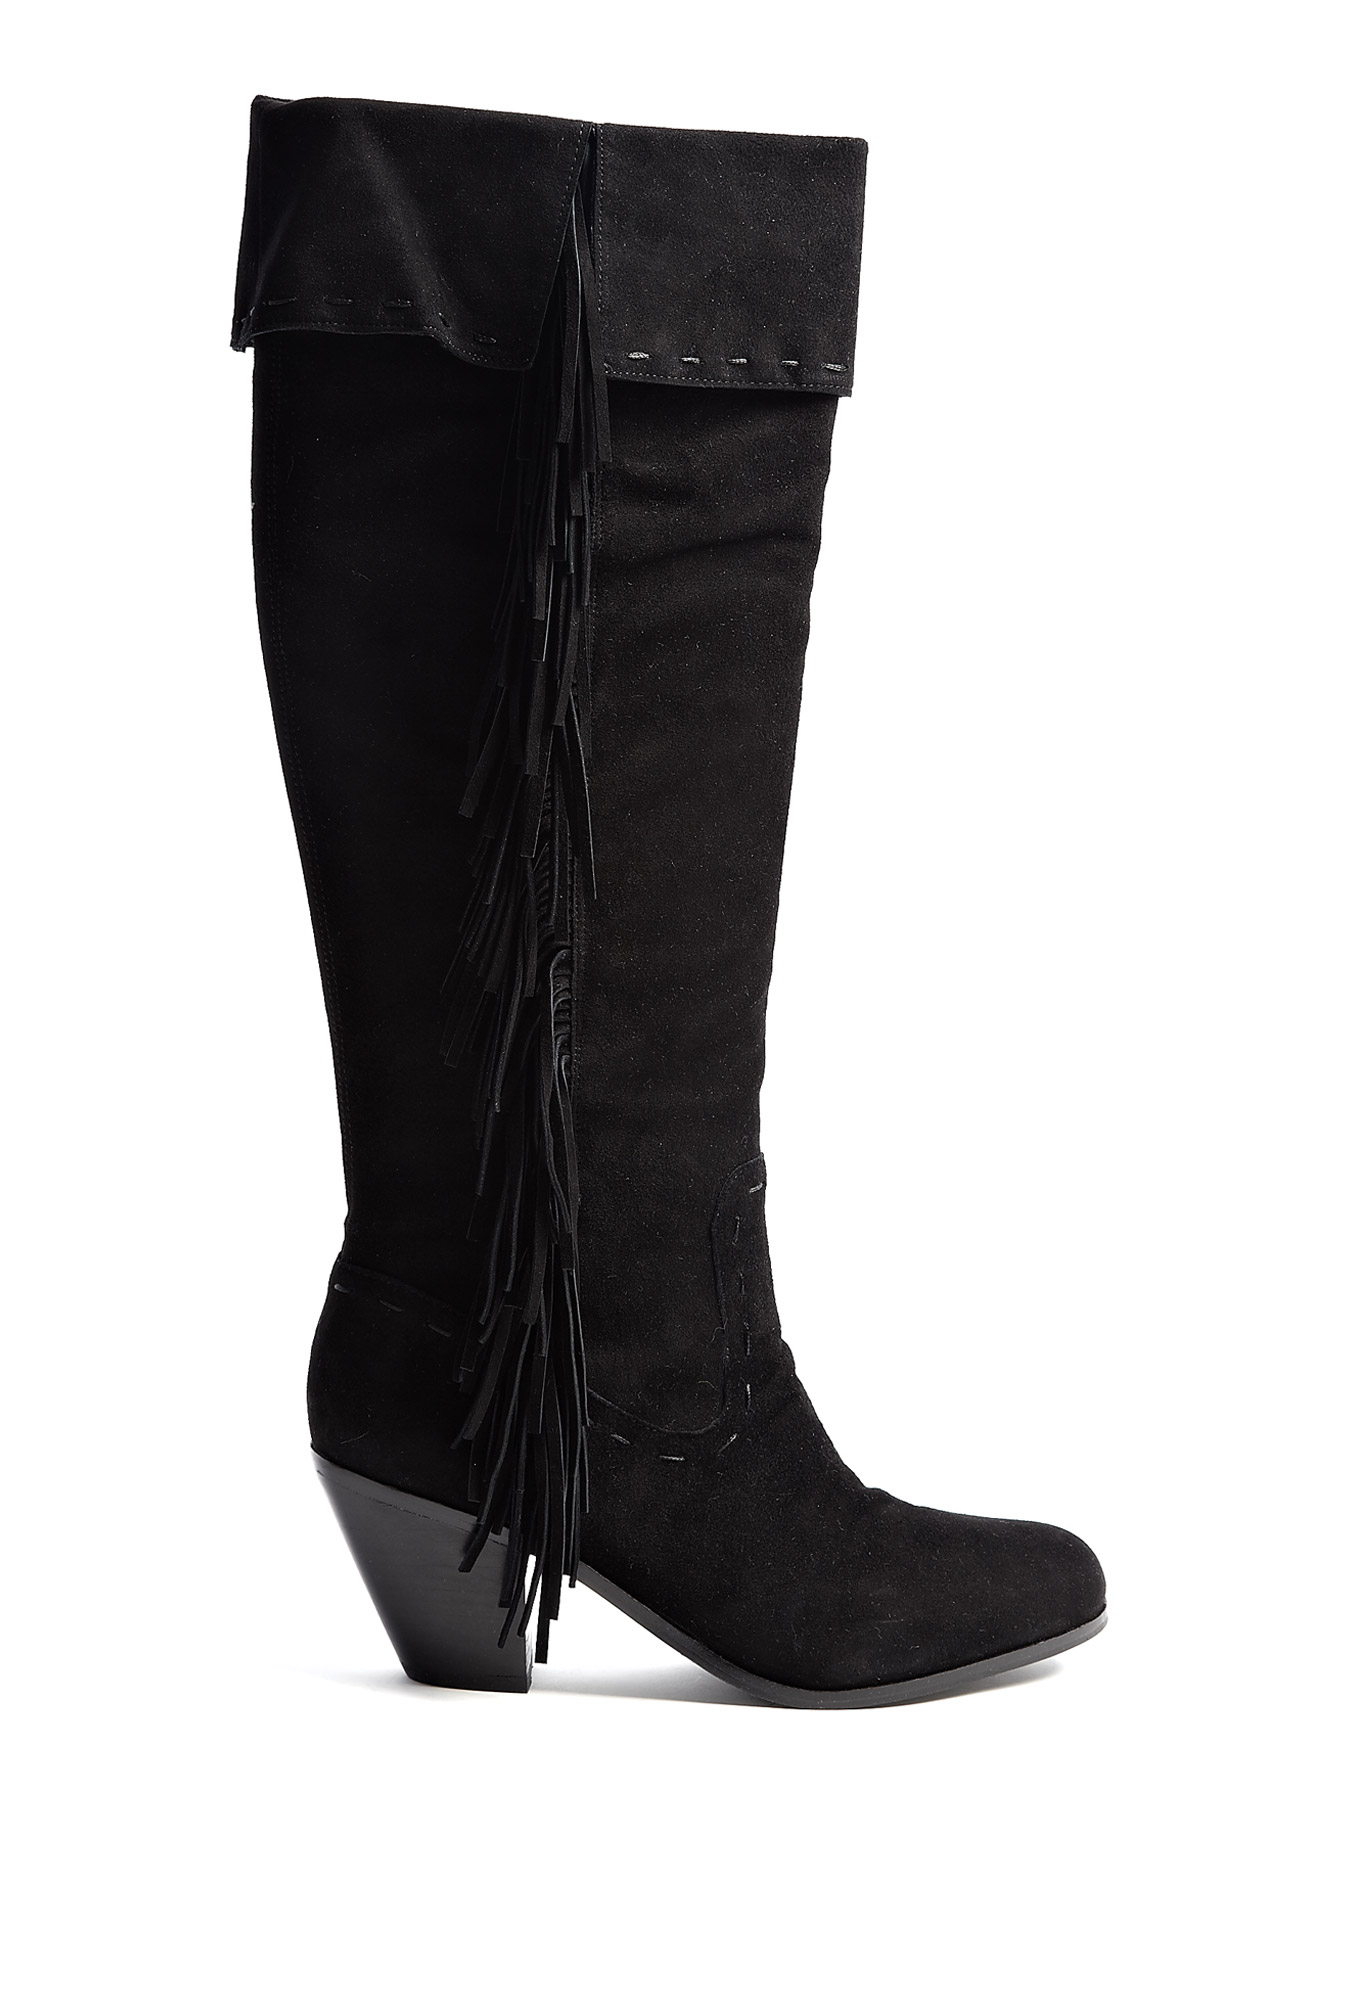 Sam Edelman Louella Fringed Knee High Boots in Black | Lyst